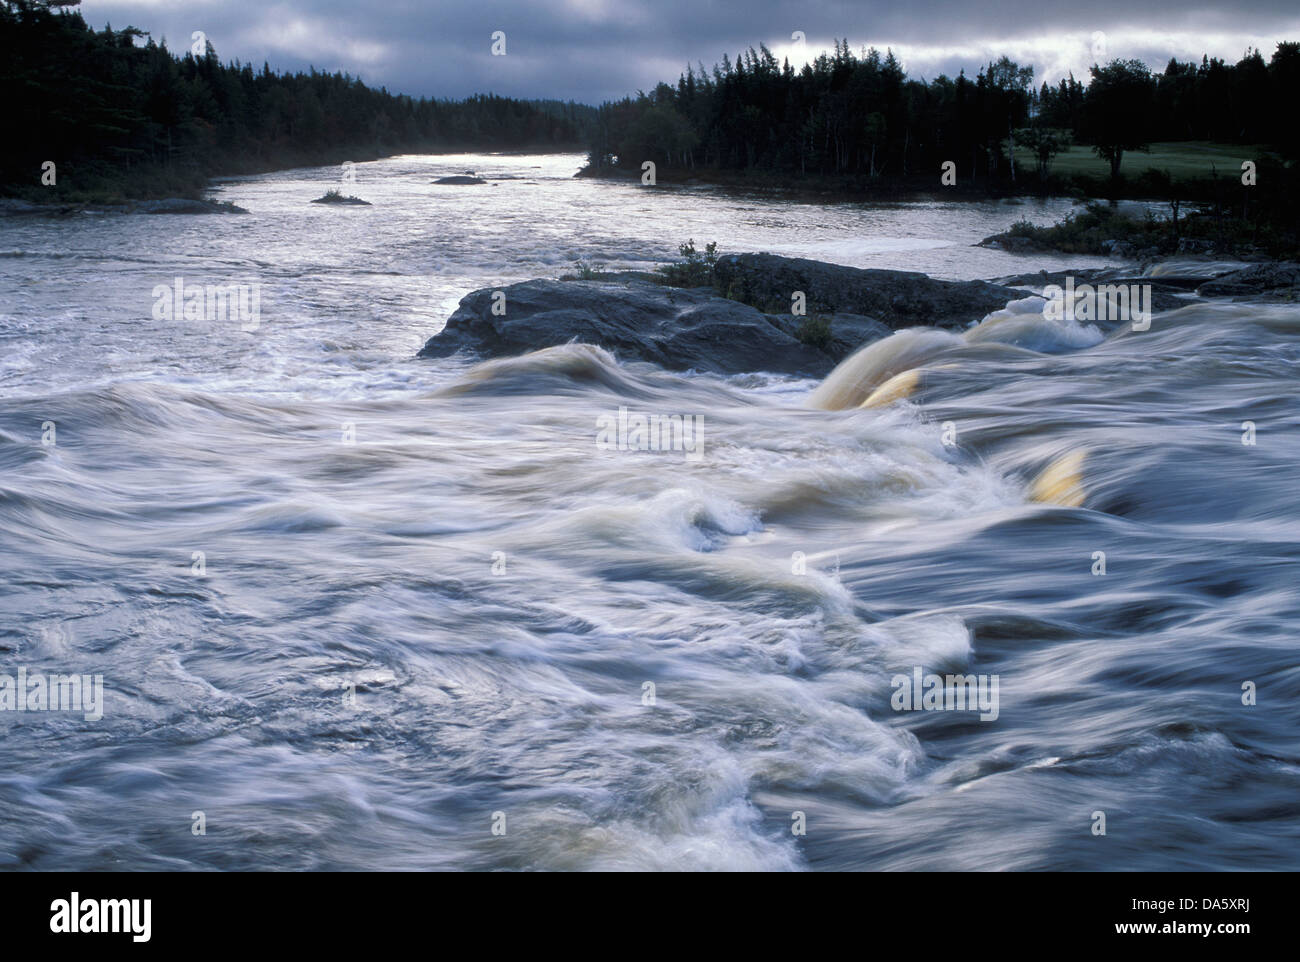 Northwest River, Terra Nova, National Park, Newfoundland, Canada, River, rapids, cold, rocks, stream, creek, rushing water, suns Stock Photo